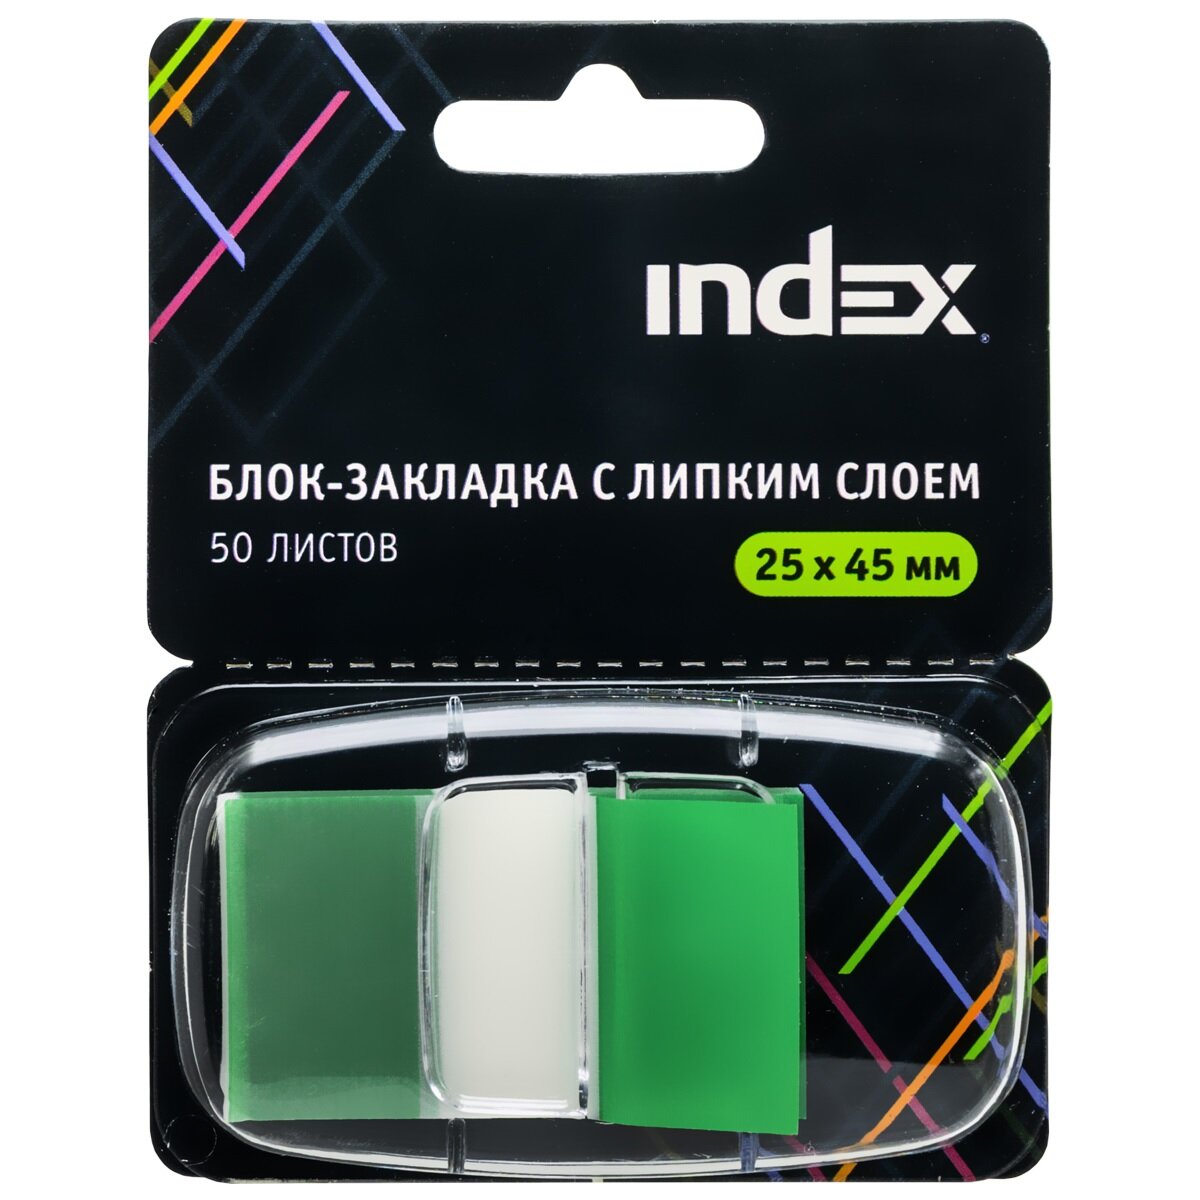 Закладка с липким слоем INDEX 25х45 мм зелёная 5 штук